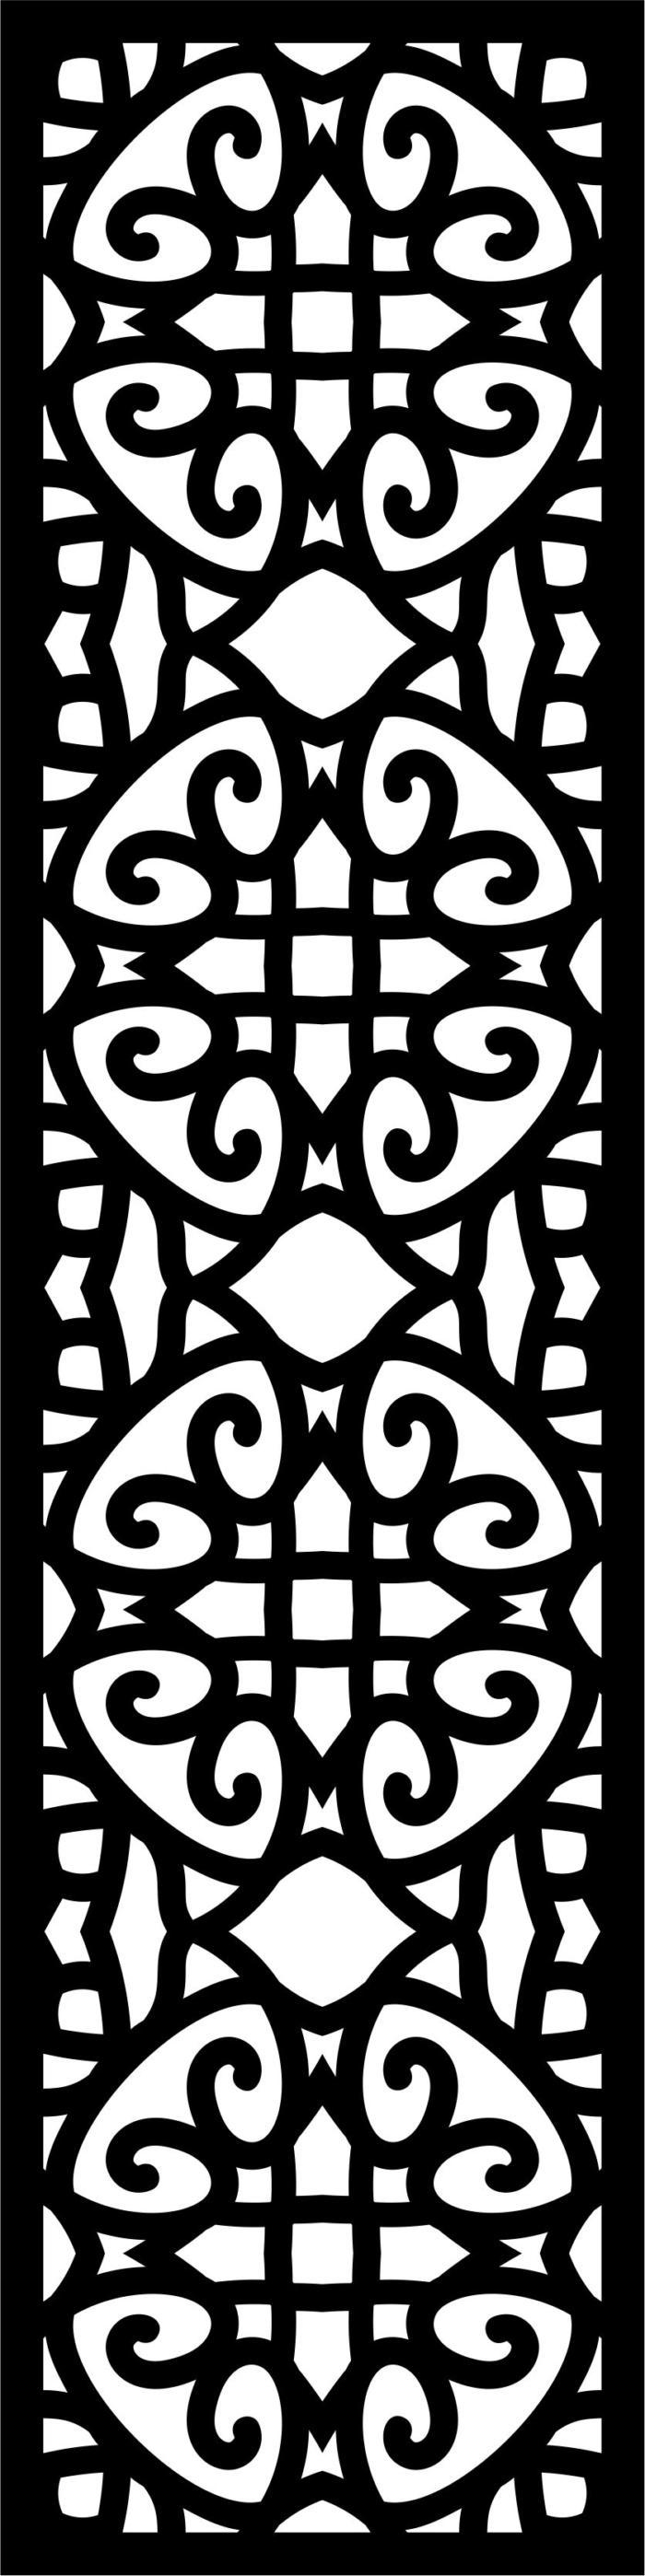 Panel Floral Lattice Stencil Room Divider Pattern Free CDR Vectors Art